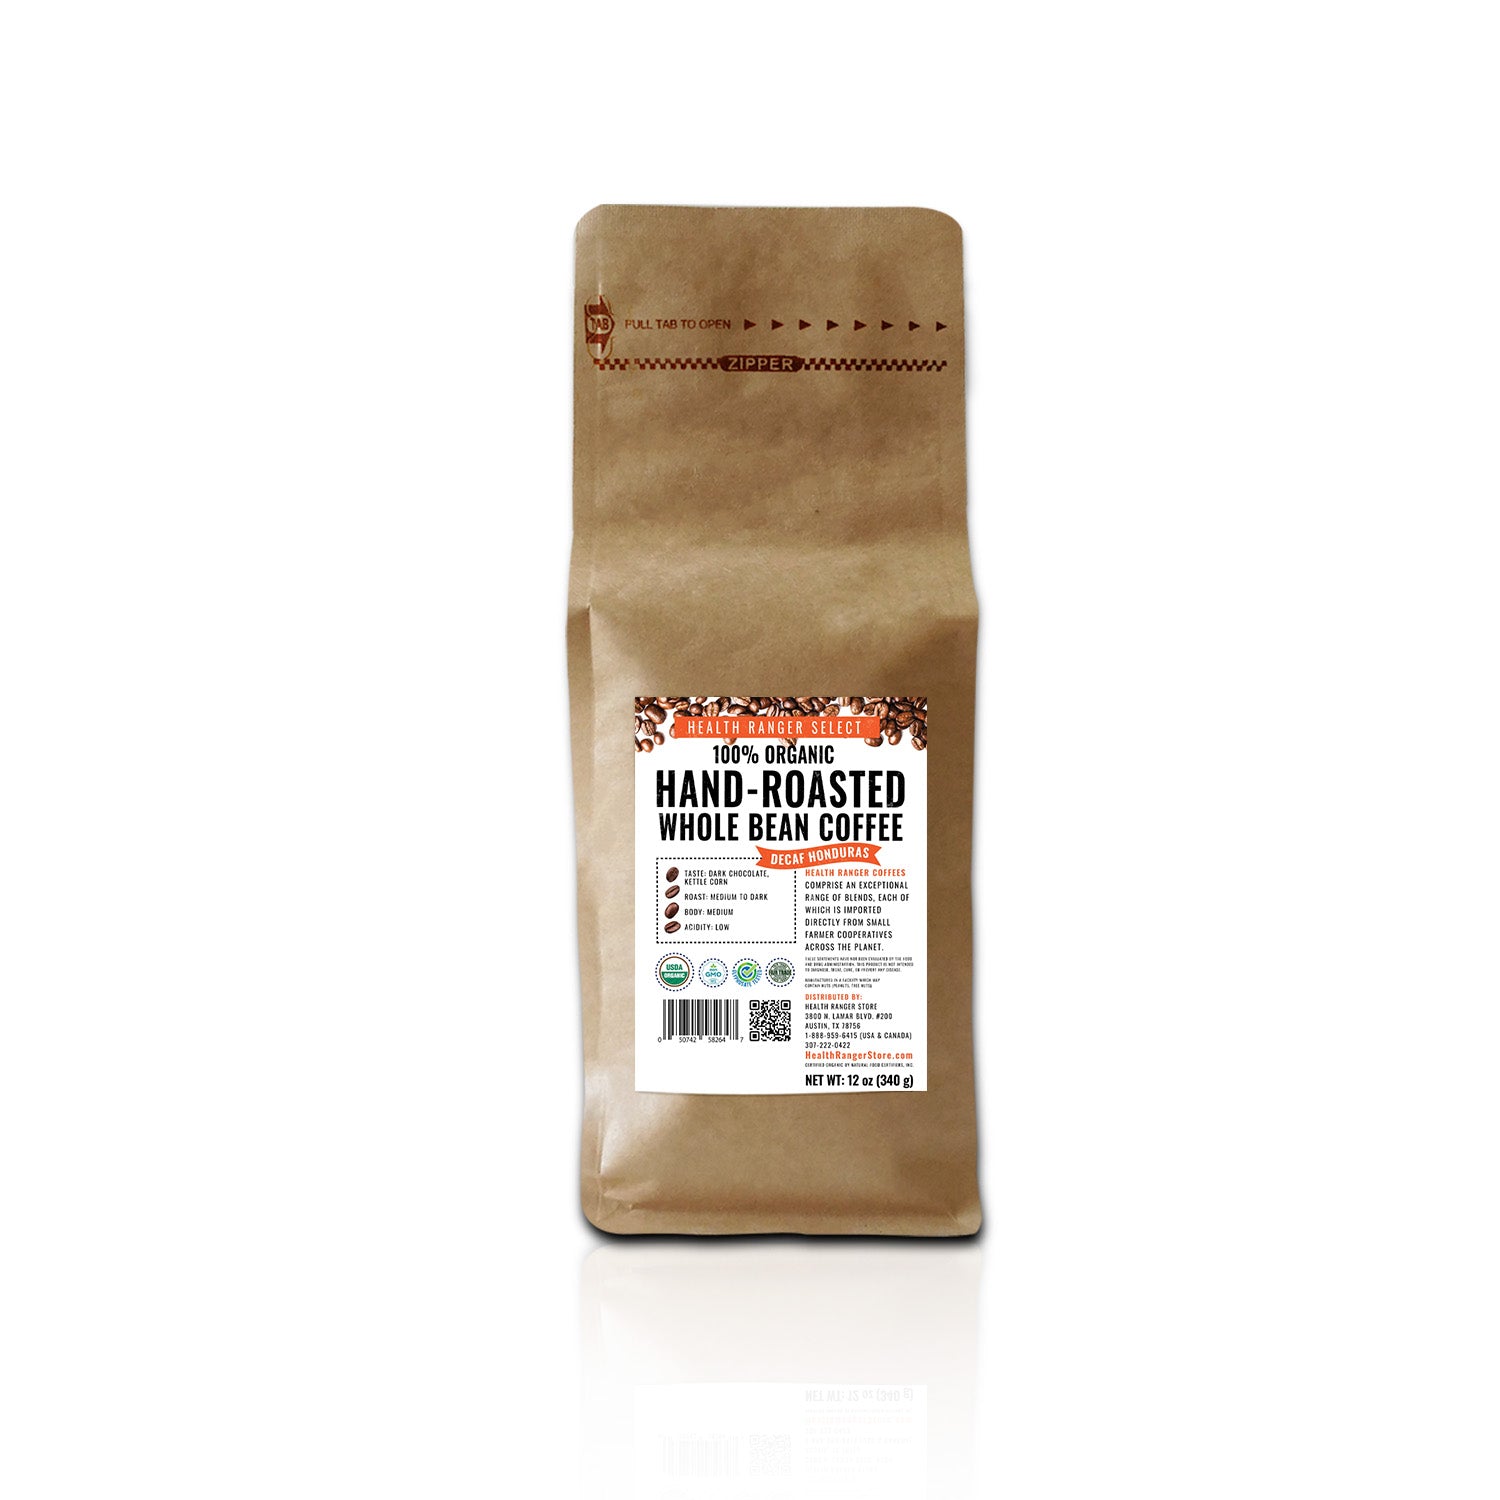 100% Organic Hand-Roasted Whole Bean Coffee (Decaf Honduras) 12oz, (340g) (3-Pack)